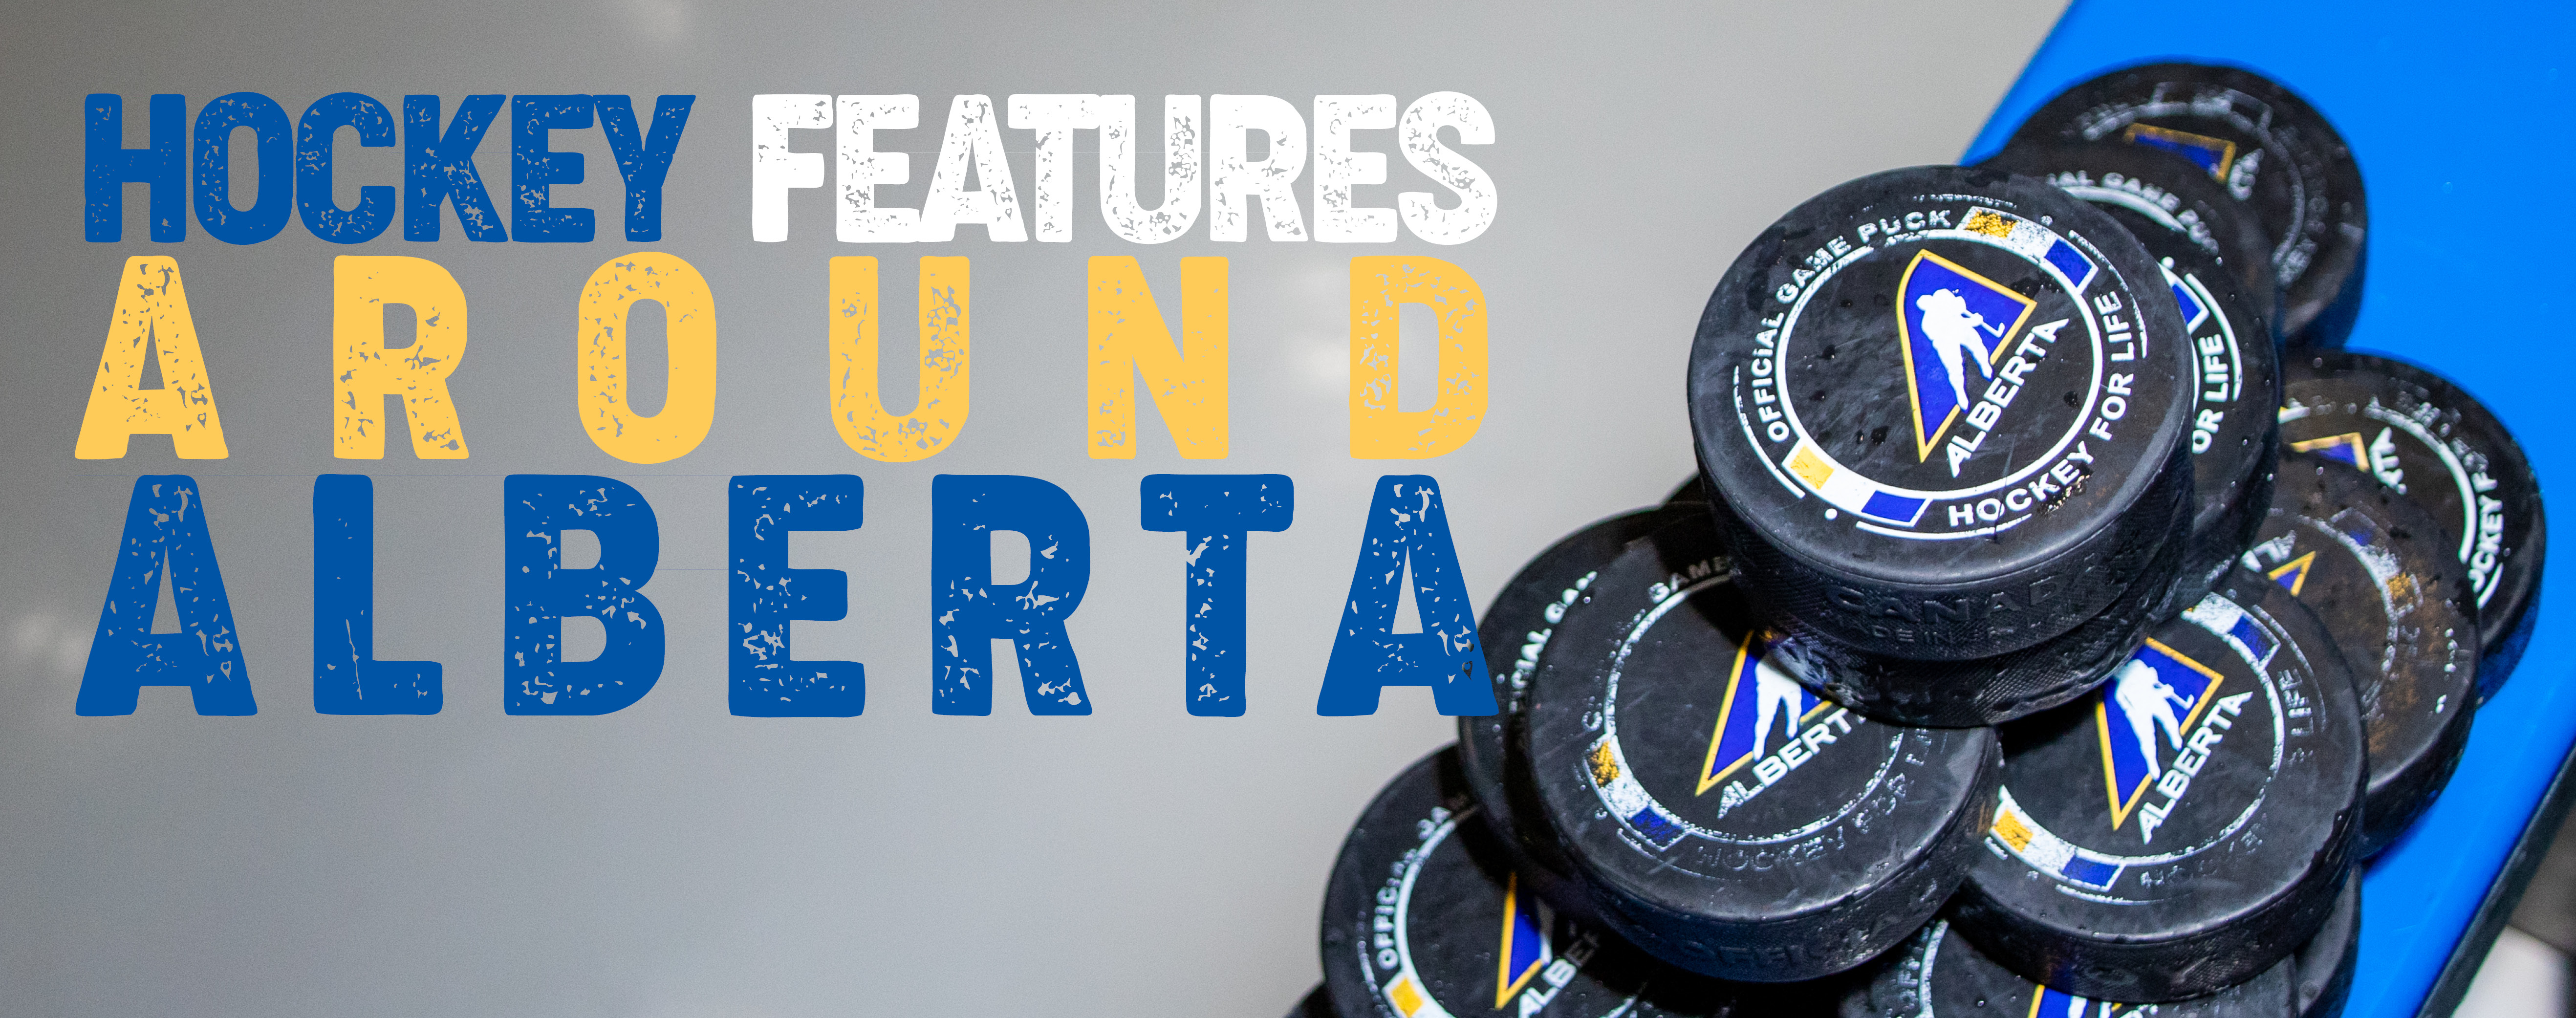 Hockey Alberta Newsletter